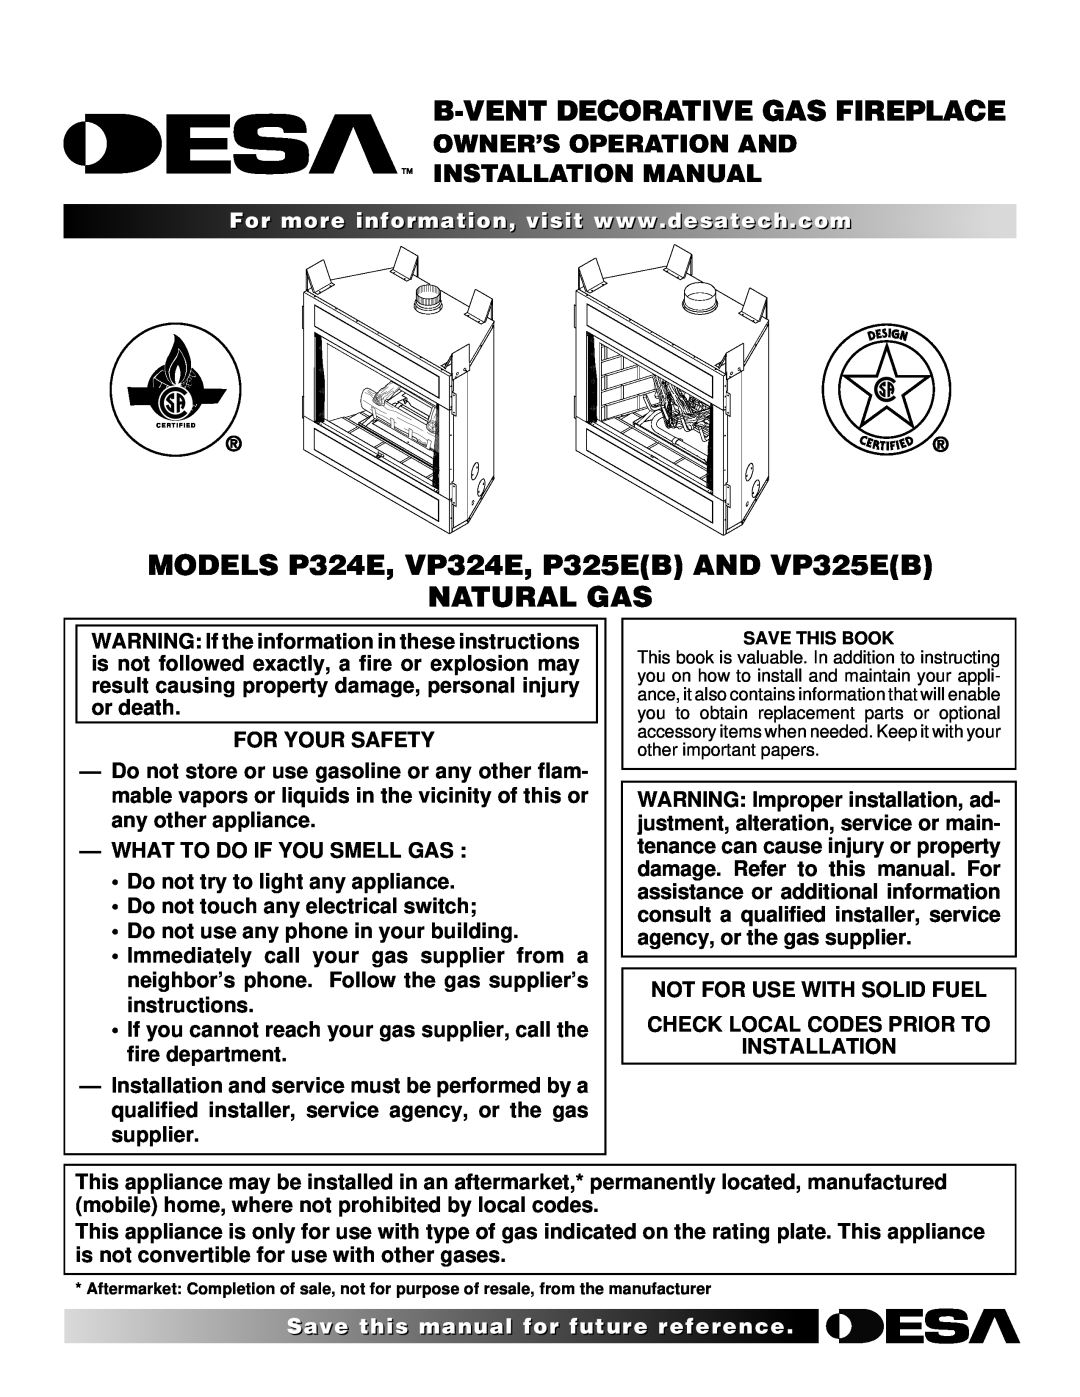 Desa VP325E(B) installation manual B-Vent Decorative Gas Fireplace, MODELS P324E, VP324E, P325EB AND VP325EB NATURAL GAS 